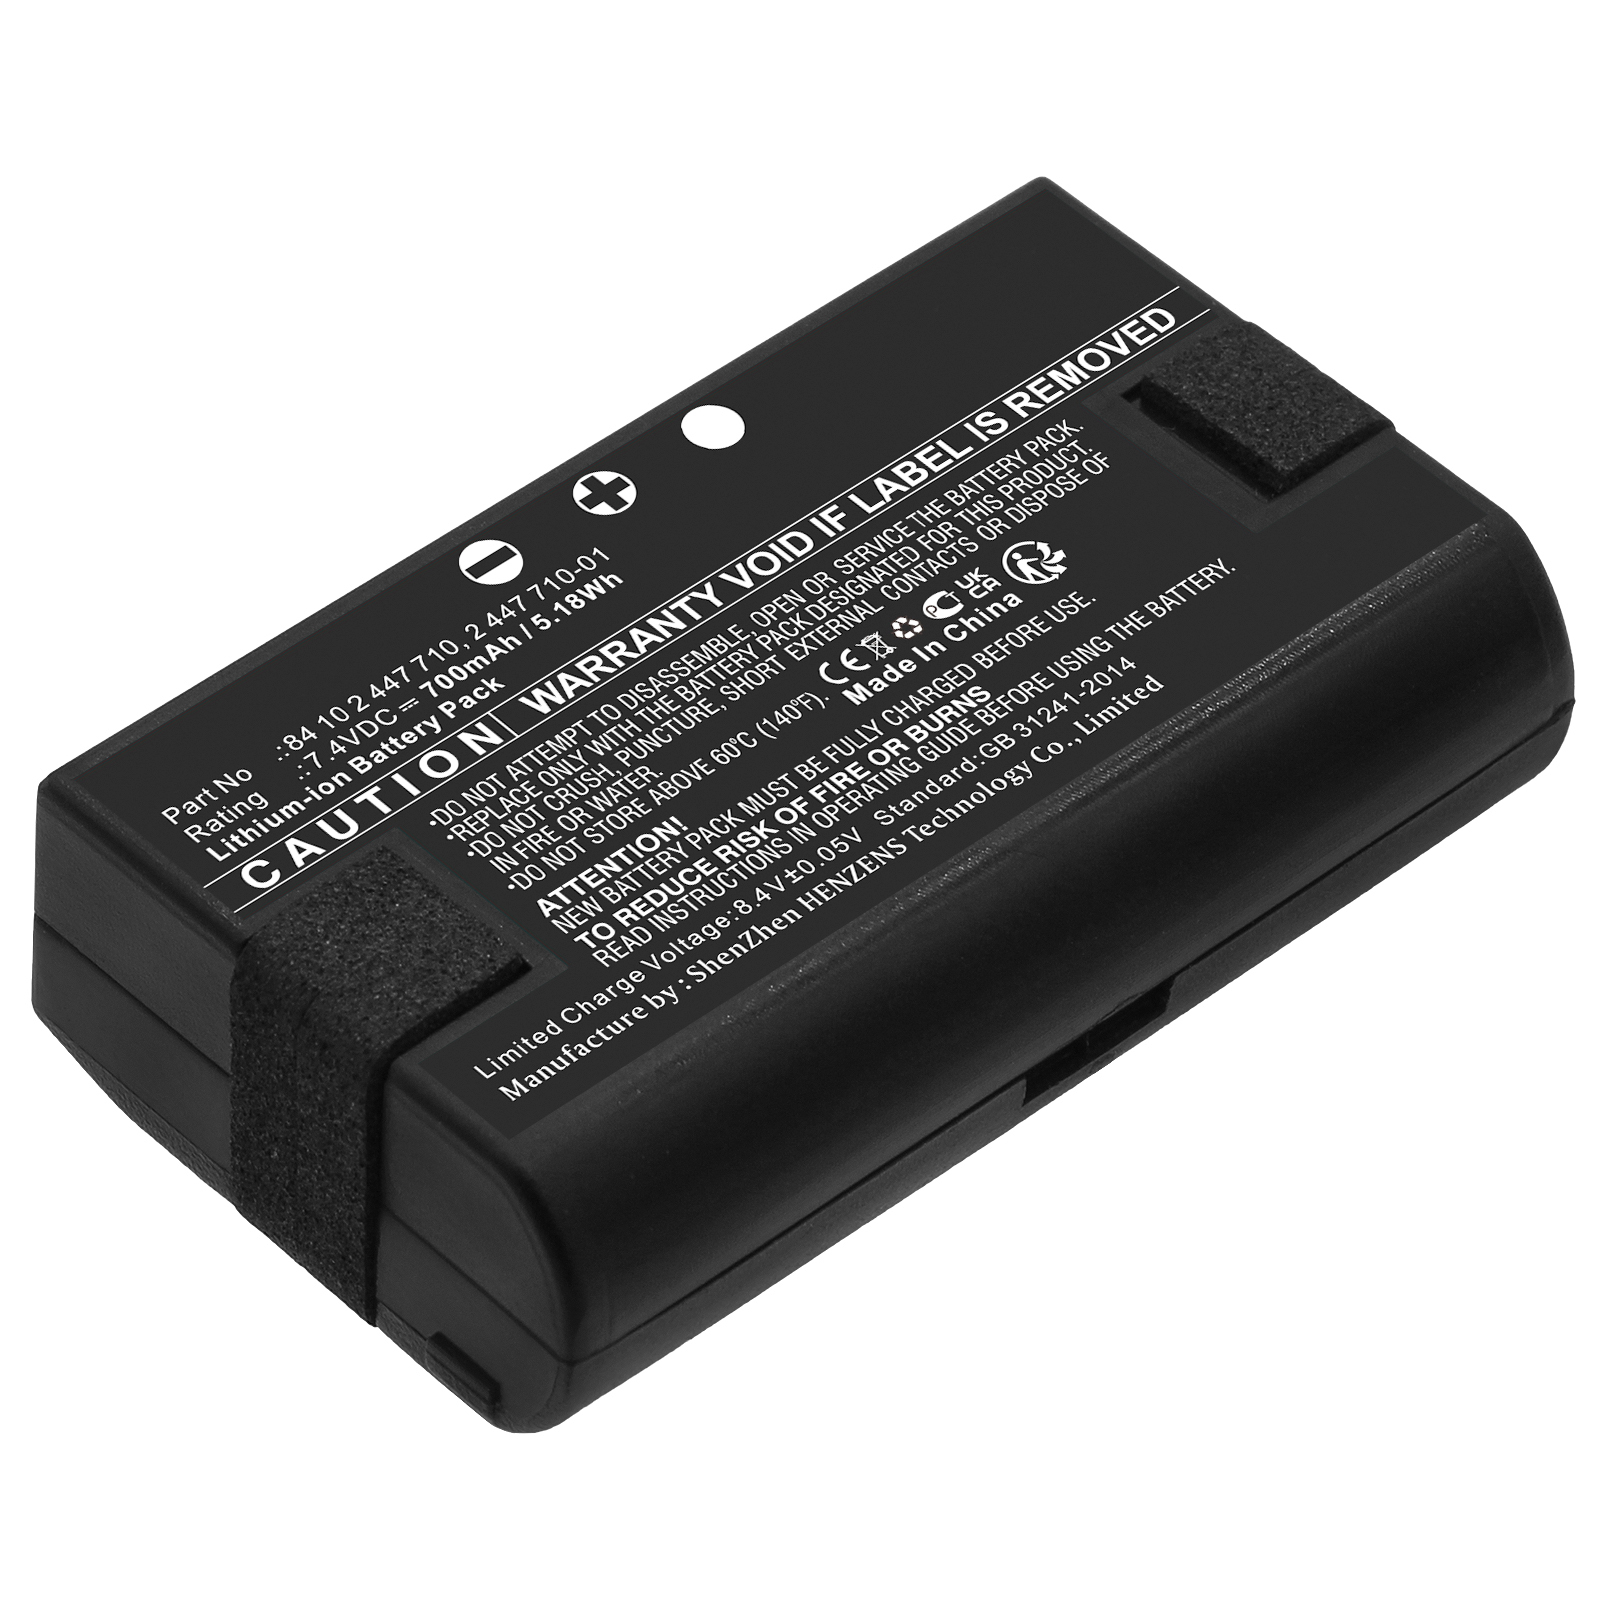 Synergy Digital Emergency Supply Battery, Compatible with BMW 2 447 710-01 Emergency Supply Battery (Li-ion, 7.4V, 700mAh)